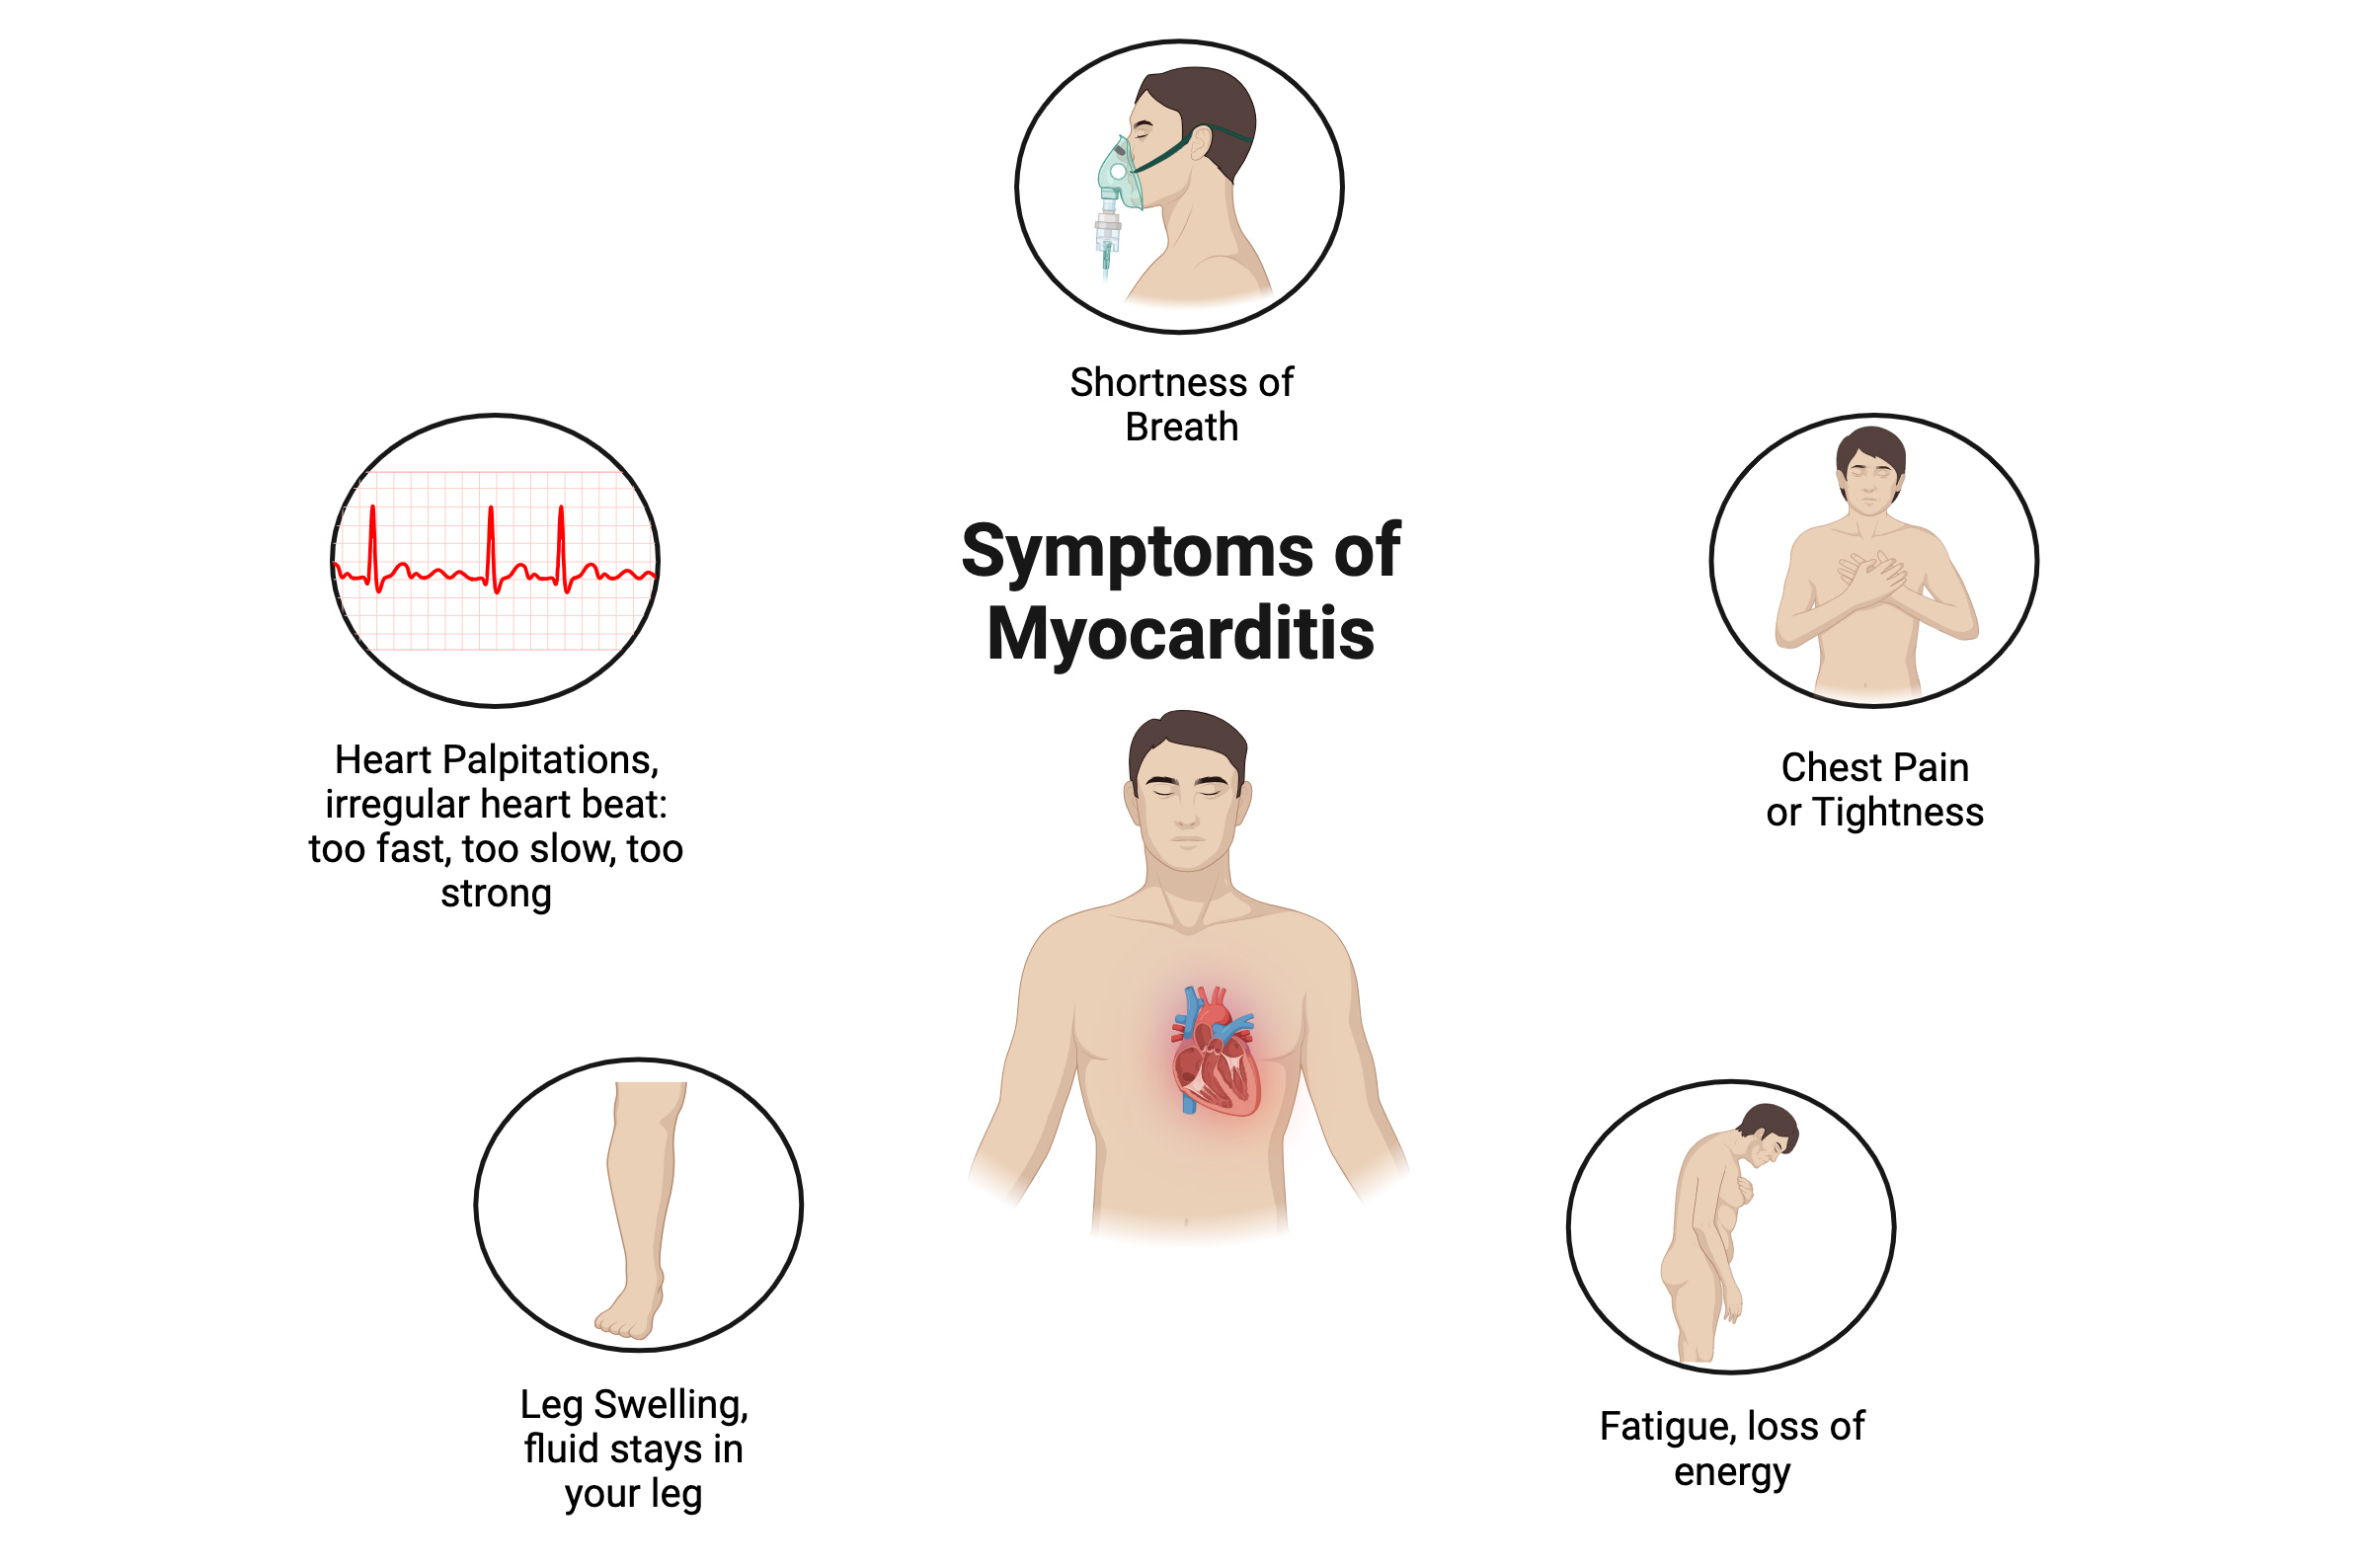 Symptoms of myocarditis